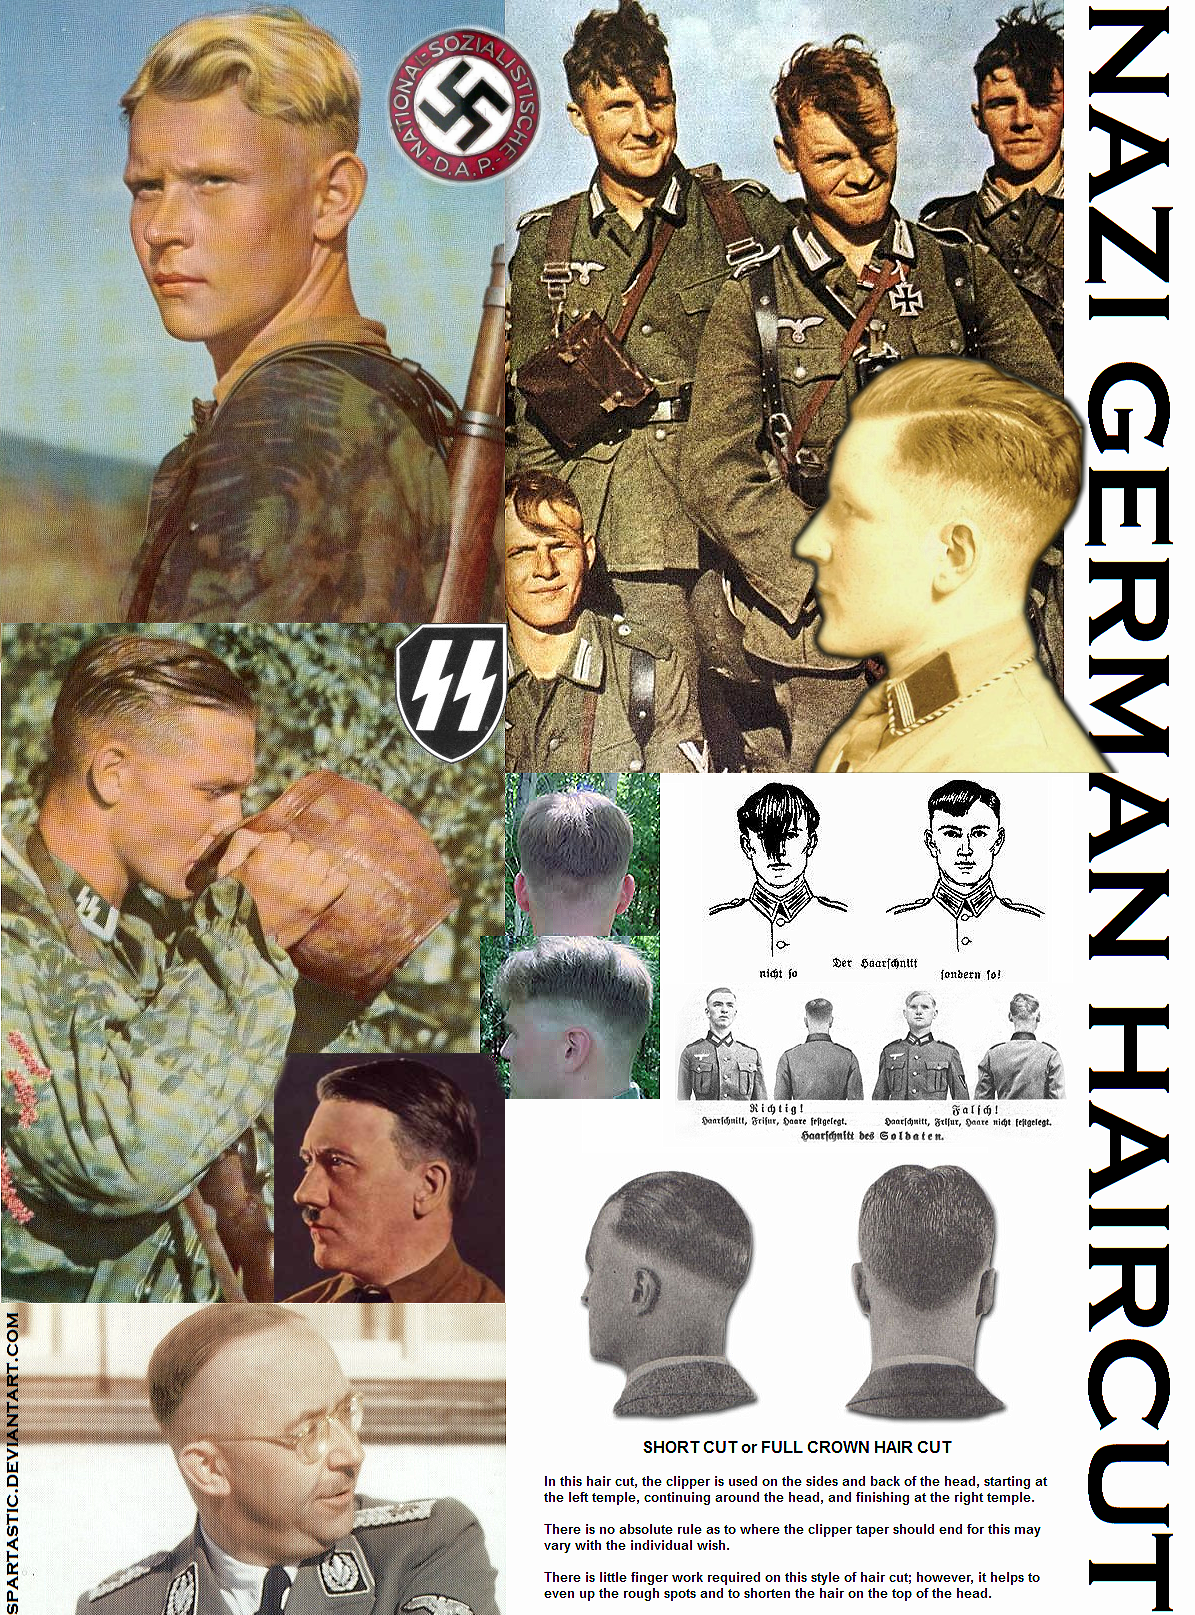 NAZI GERMAN HAIRCUT by Spartastic on DeviantArt.